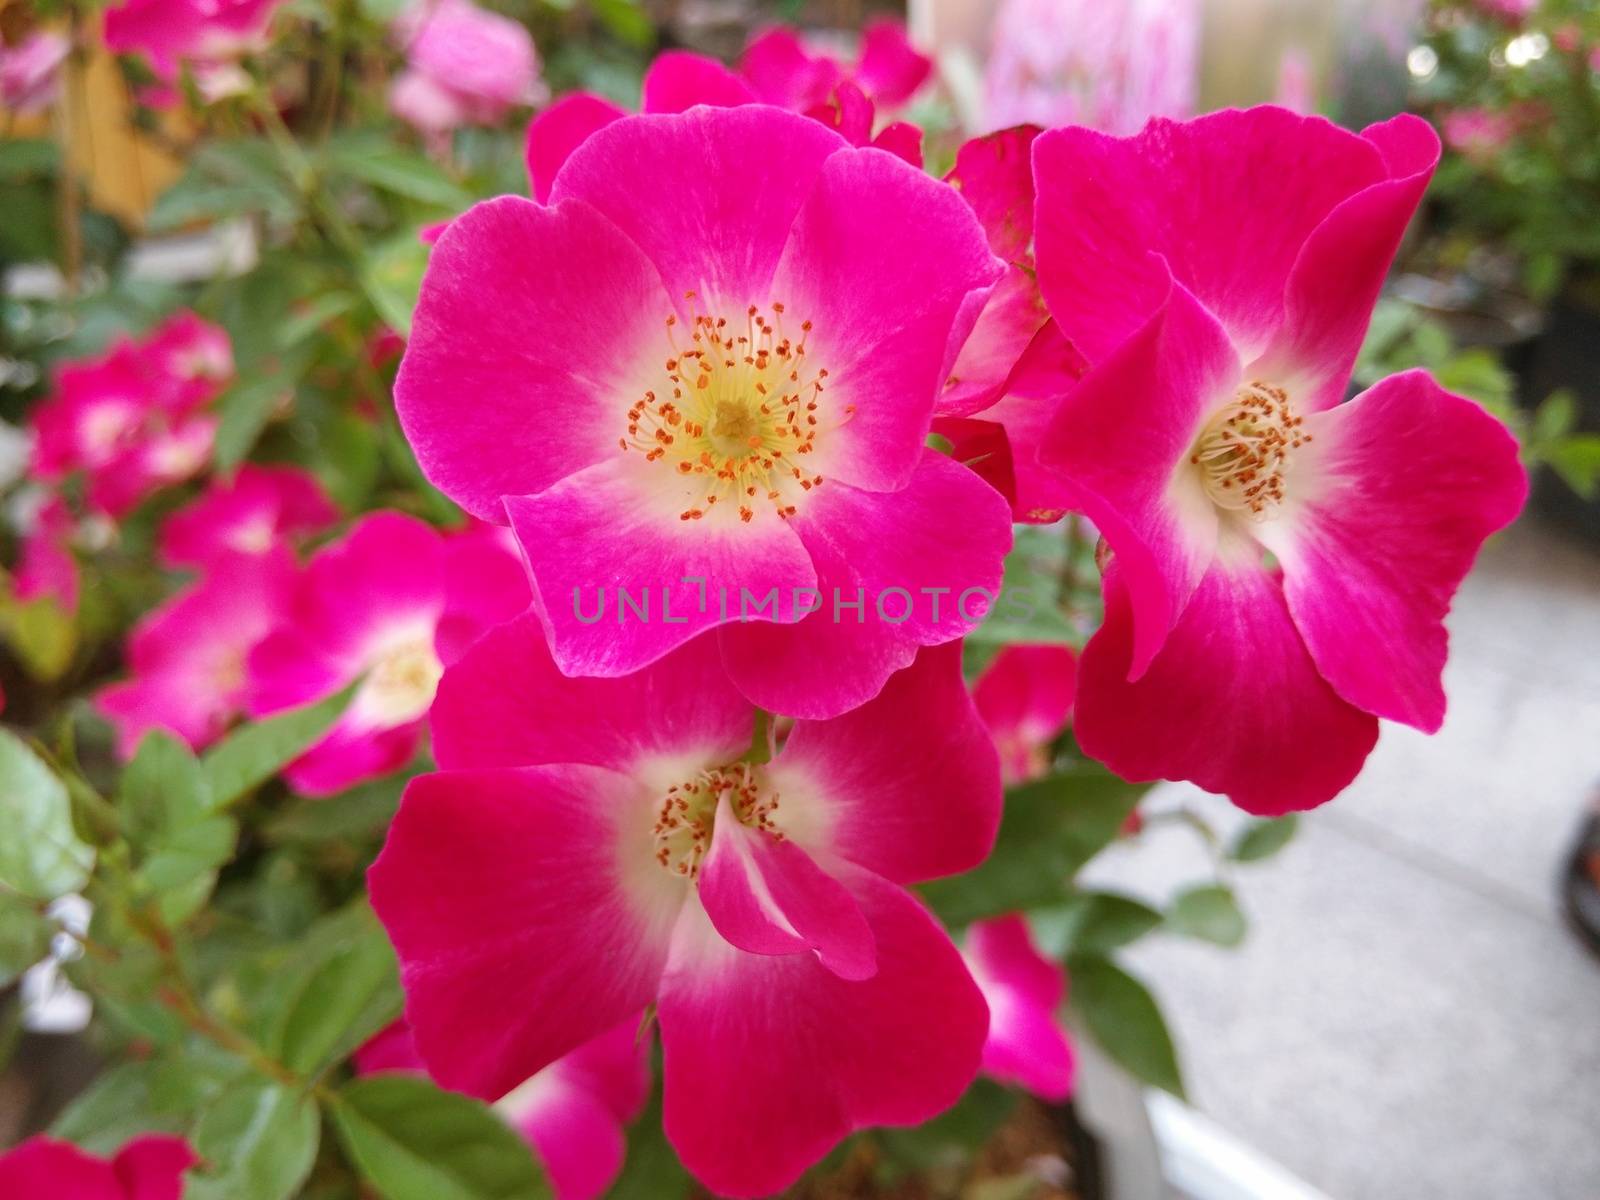 Graceful of Shocking Pink Flower in the Garden